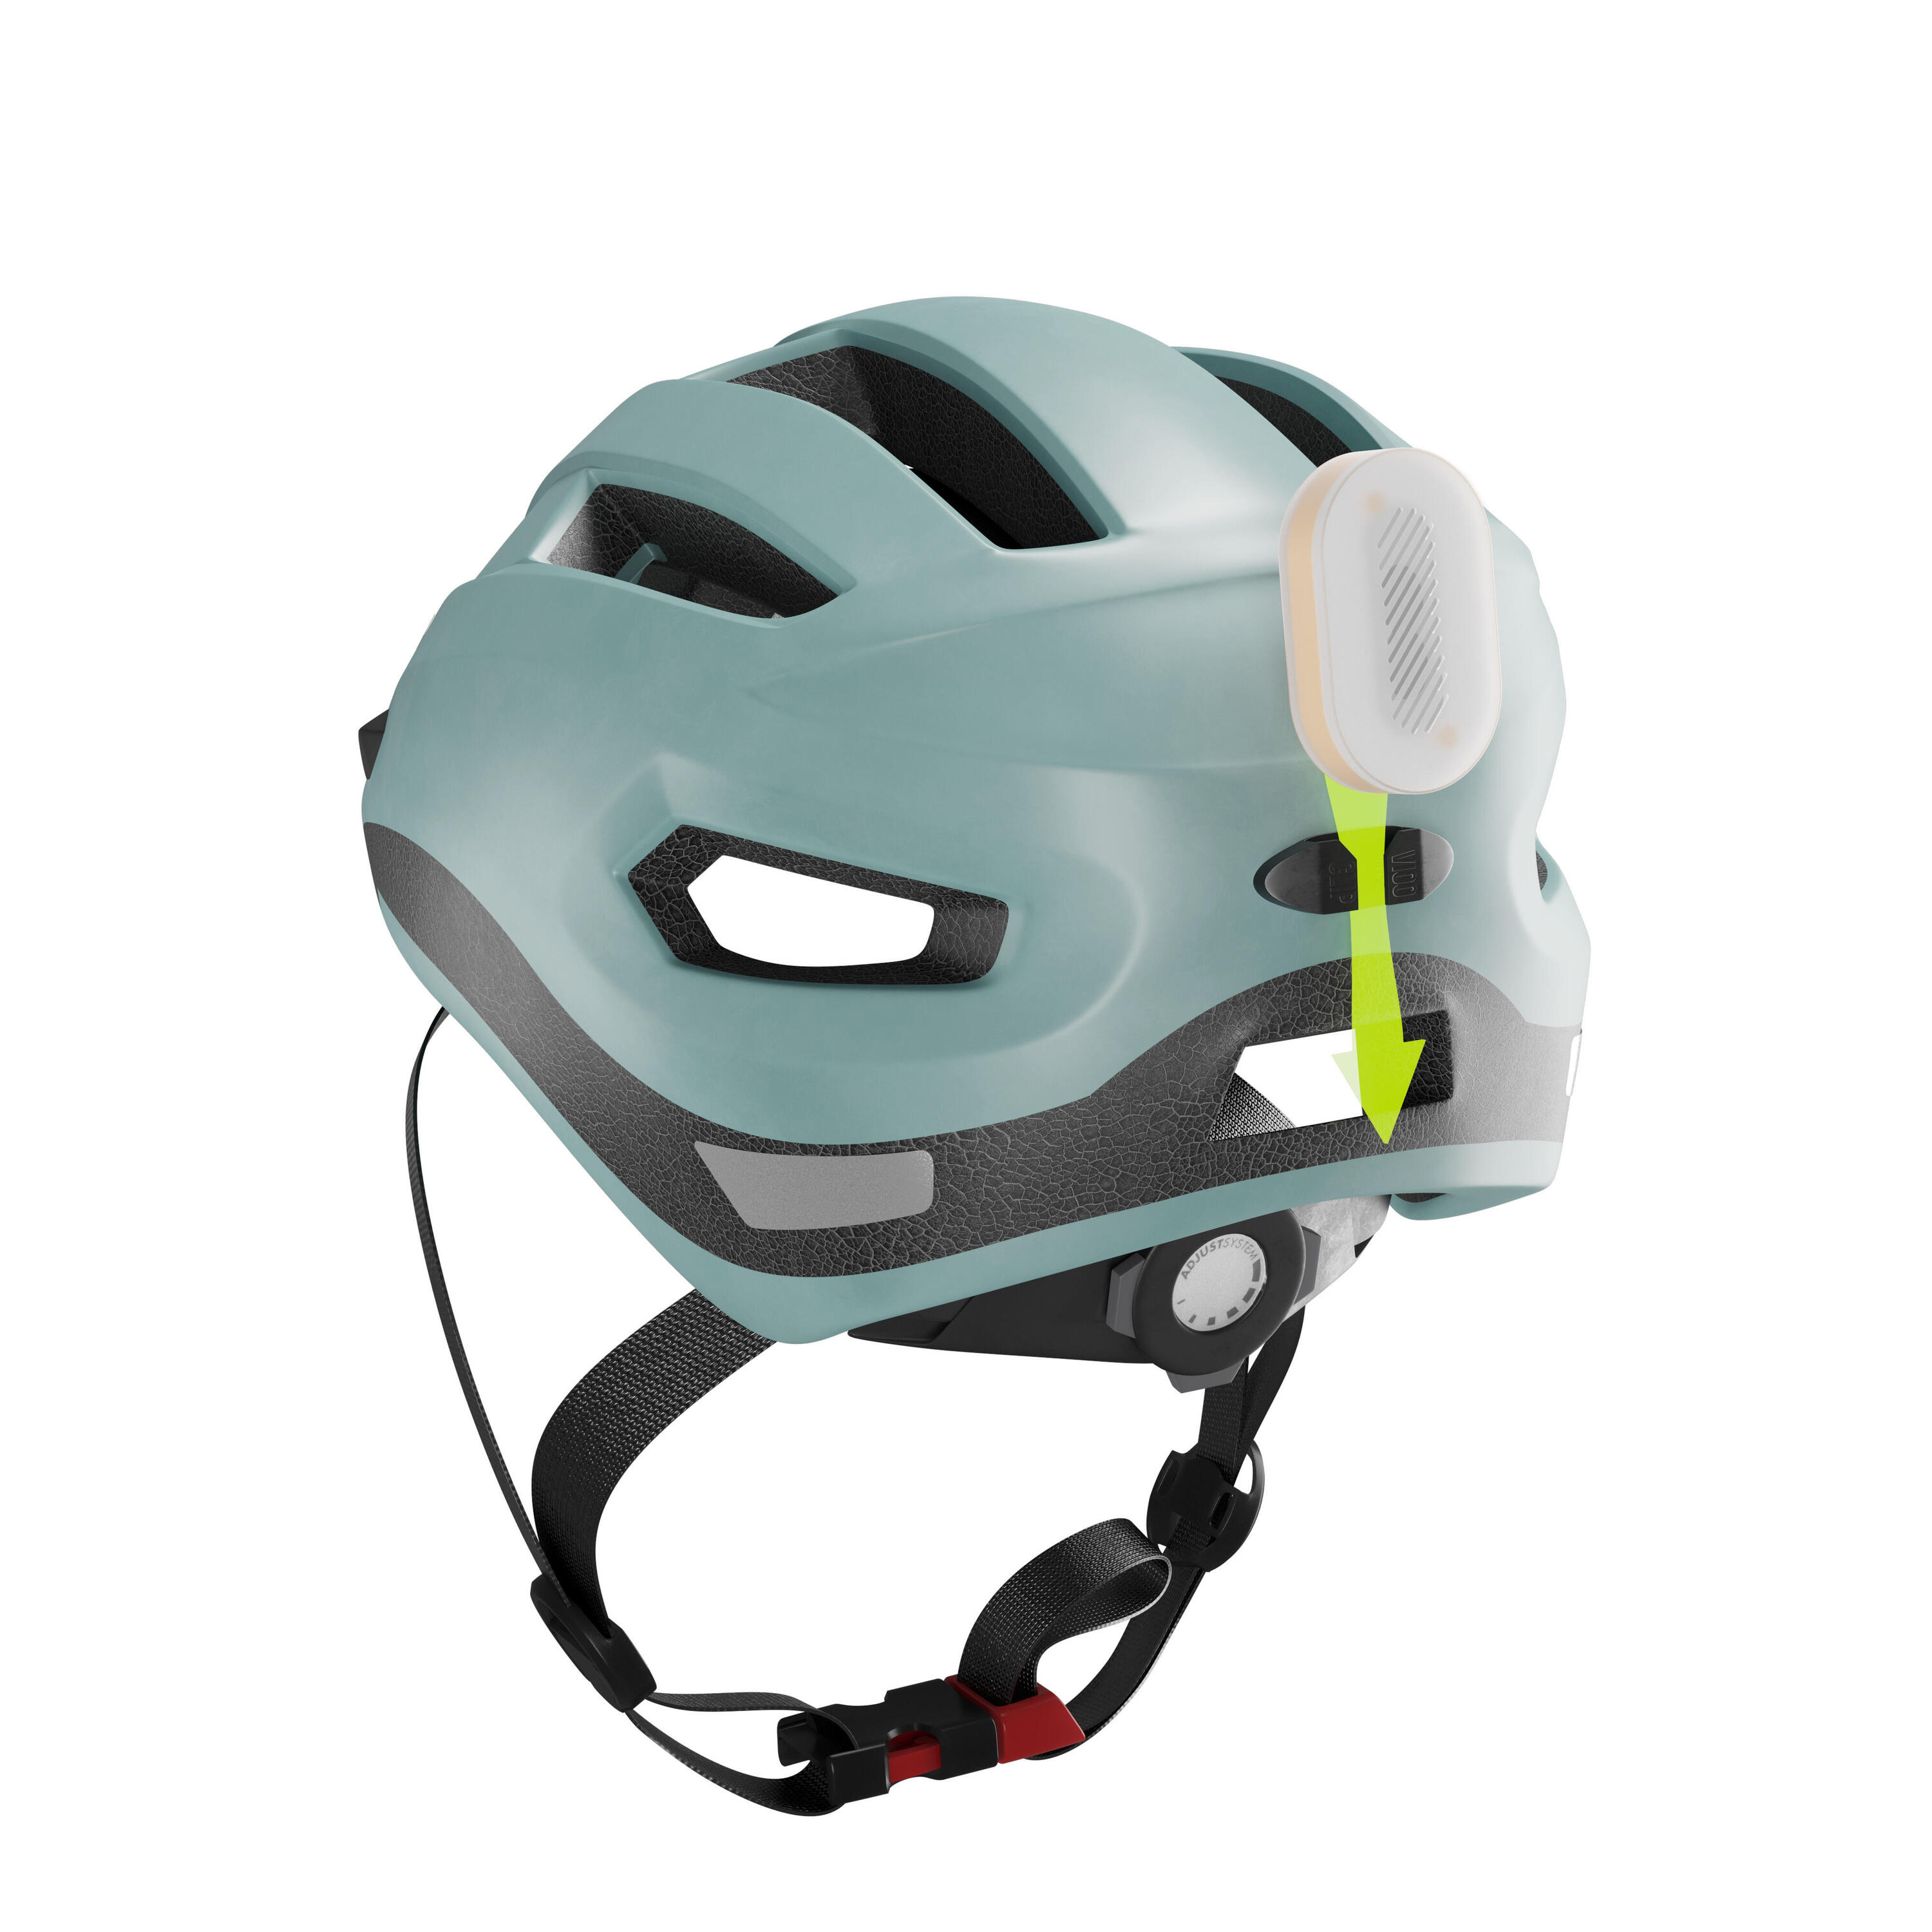 City Cycling Helmet 500 - Green 4/6